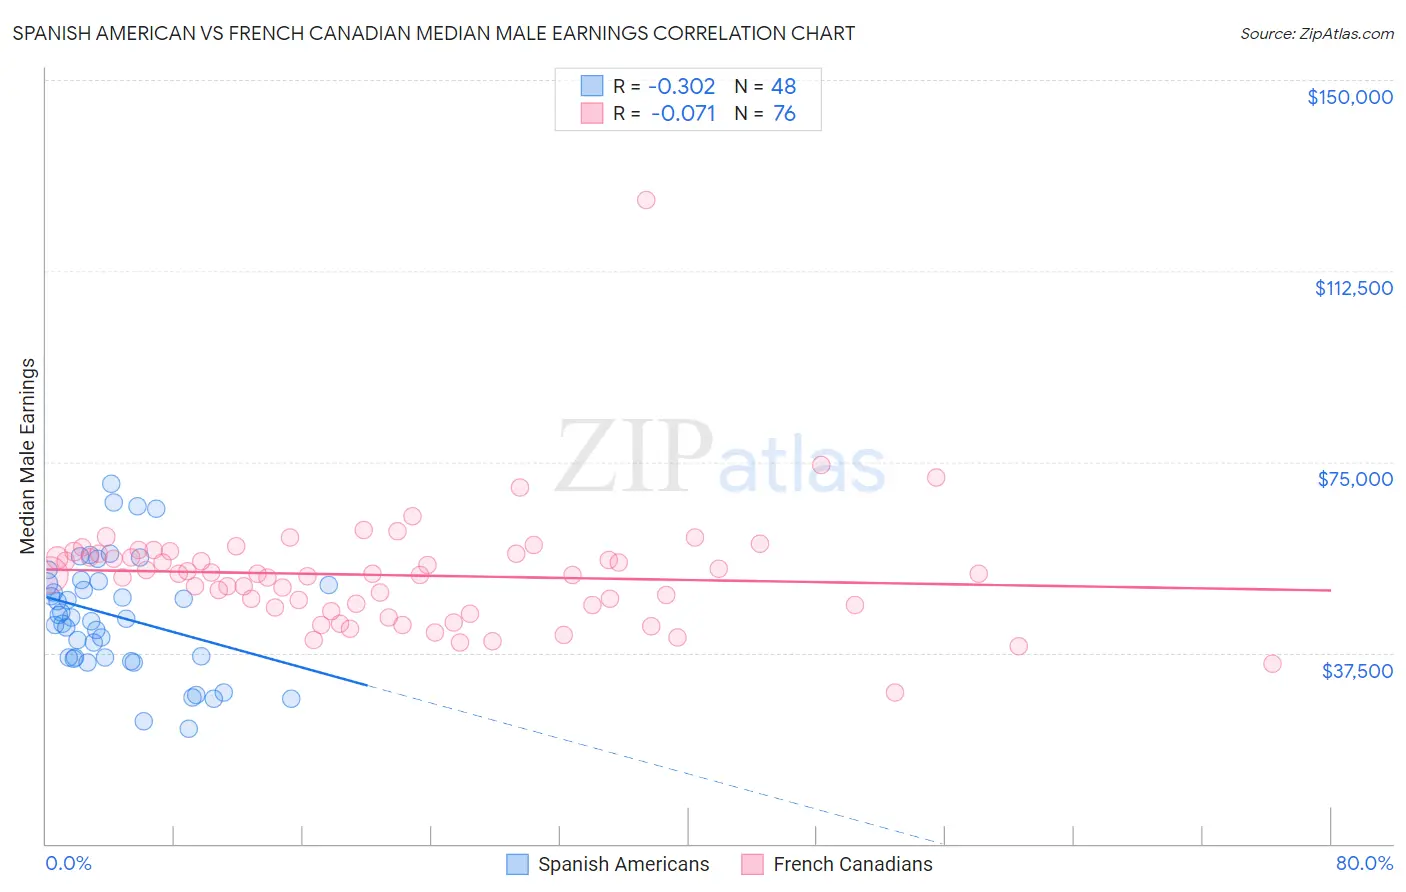 Spanish American vs French Canadian Median Male Earnings